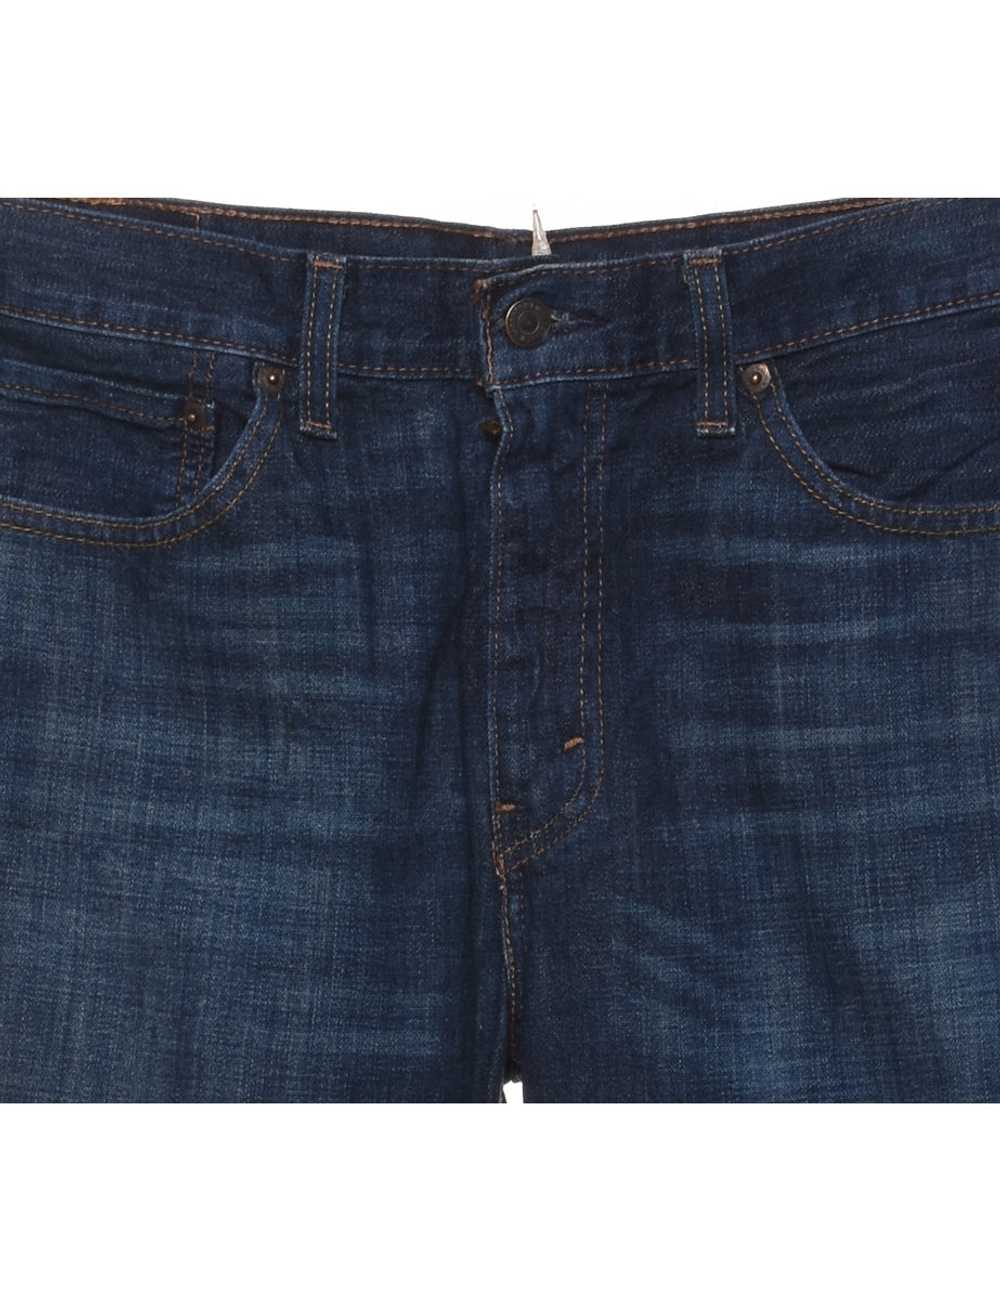 514's Fit Levi's Dark Wash Jeans - W34 L32 - image 3